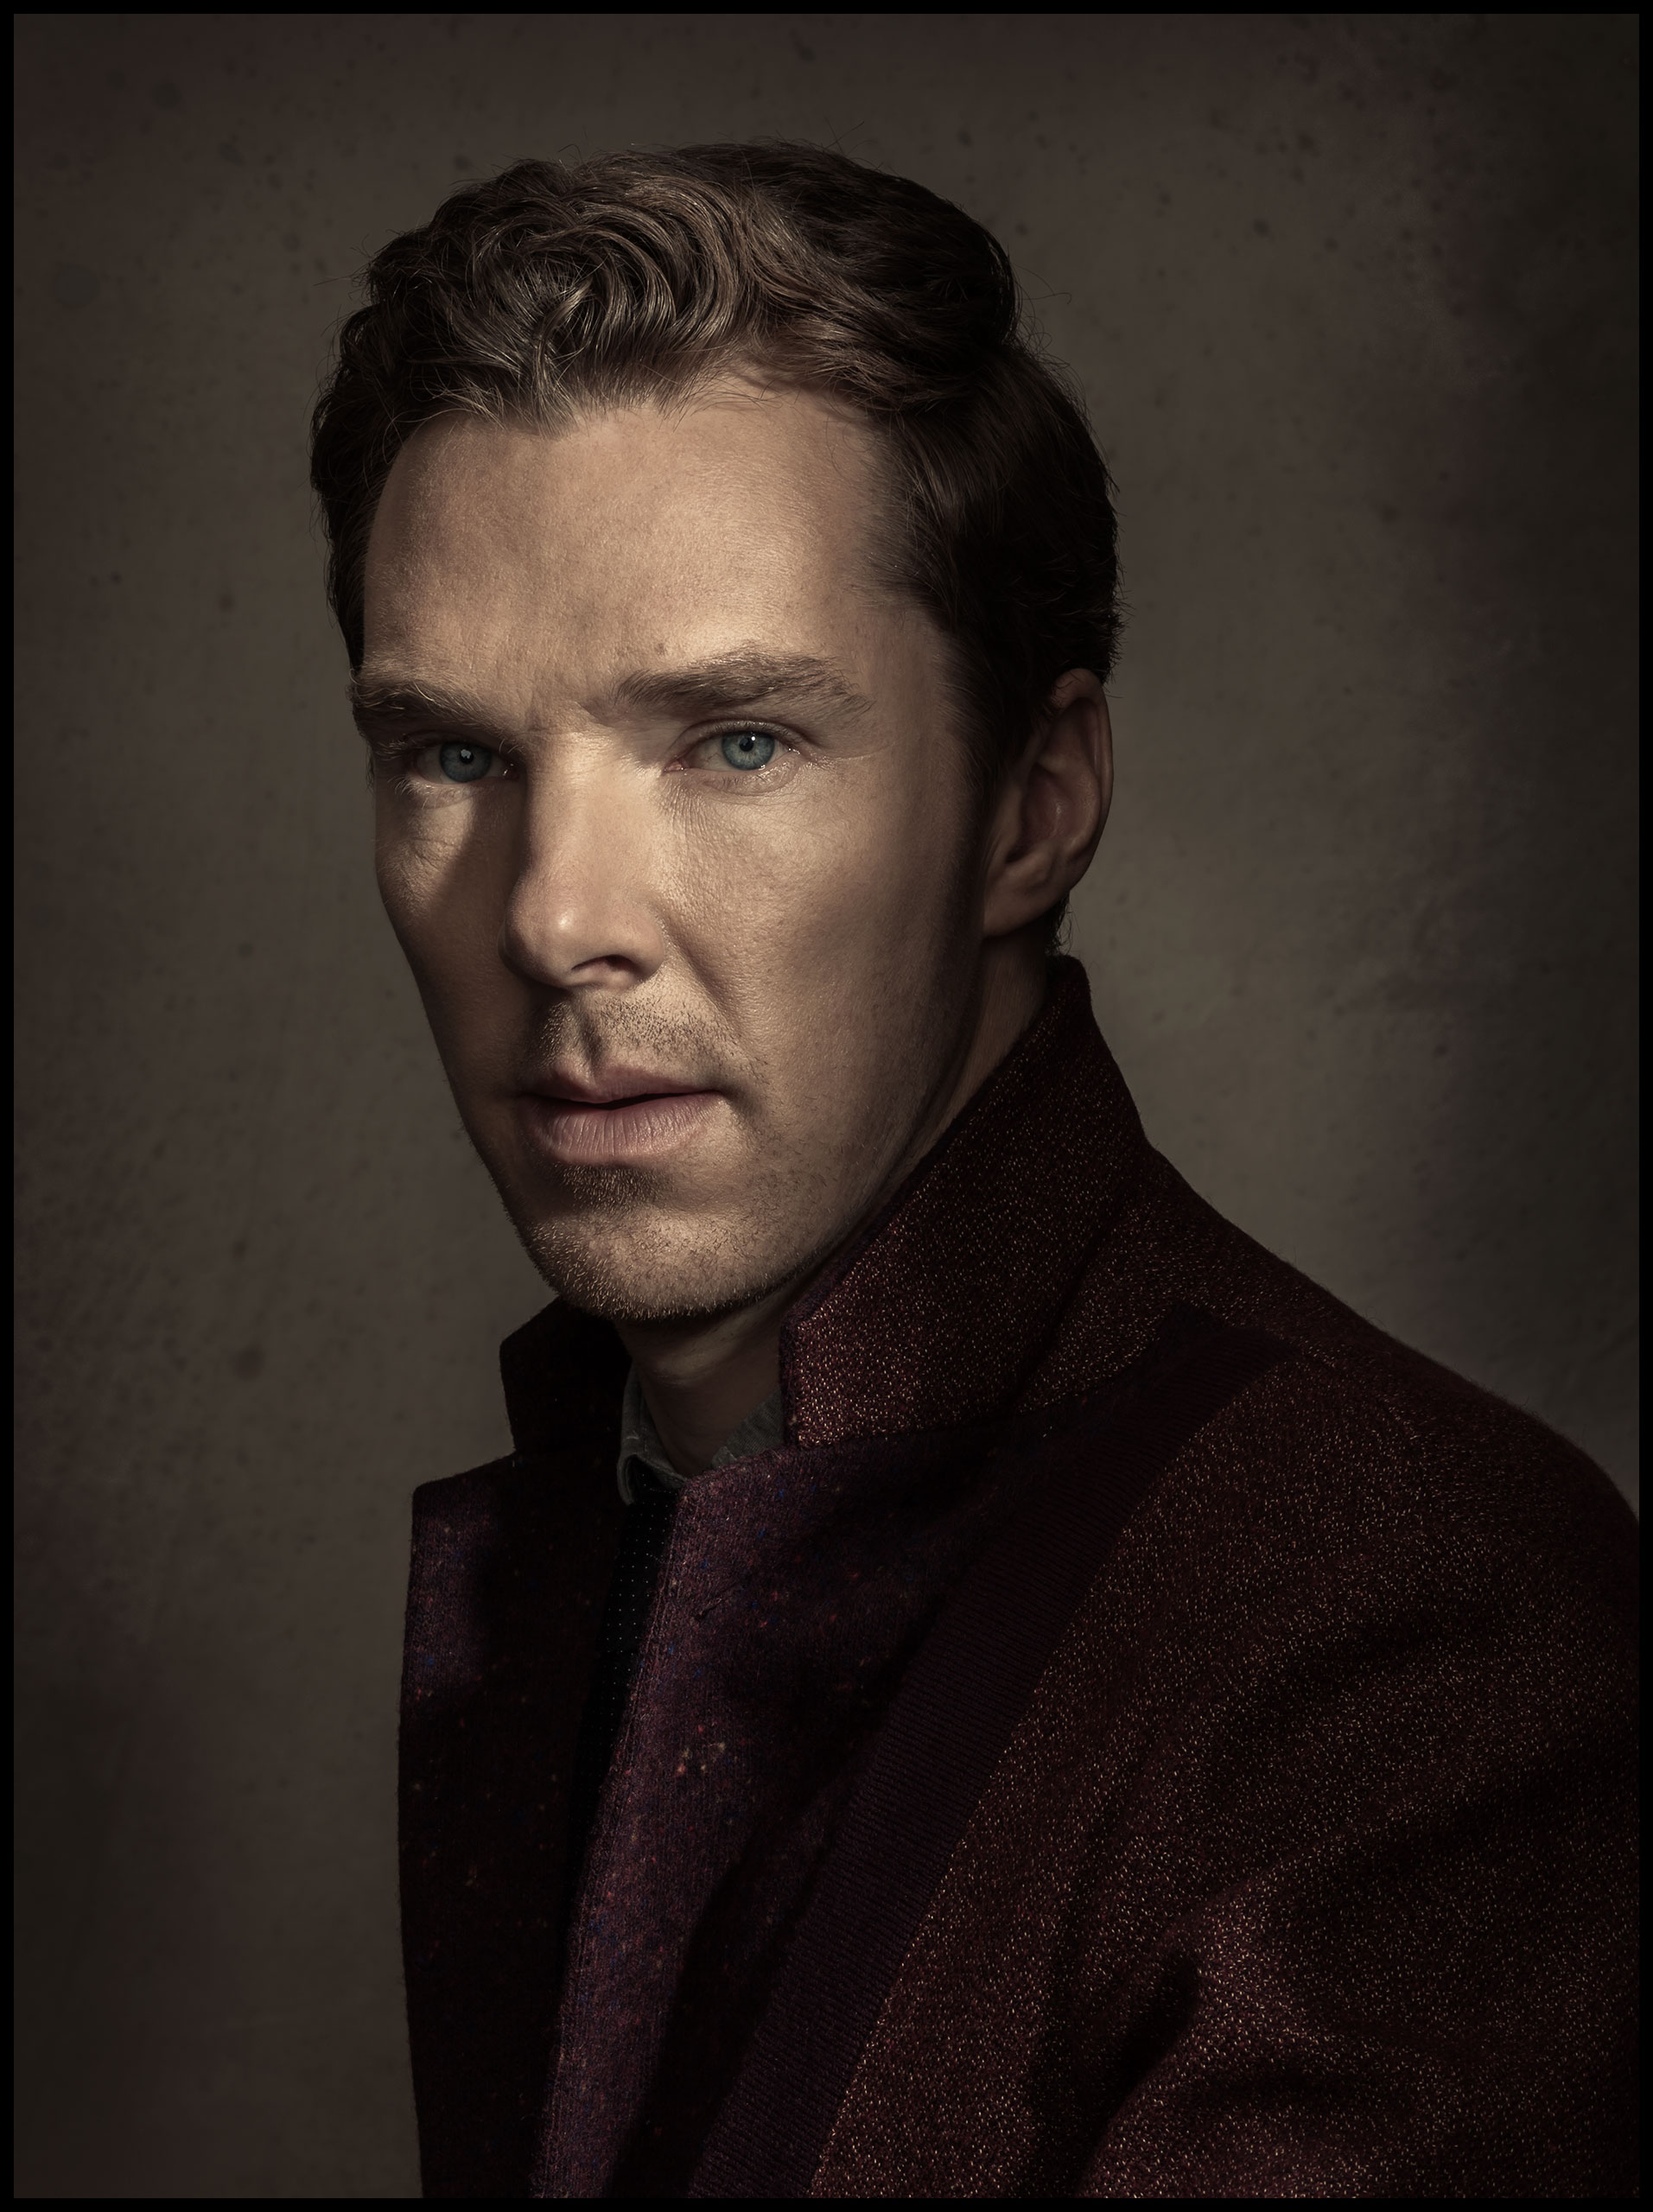 Portrait of actor Benedict Cumberbatch photographed in California on November 9, 2014.